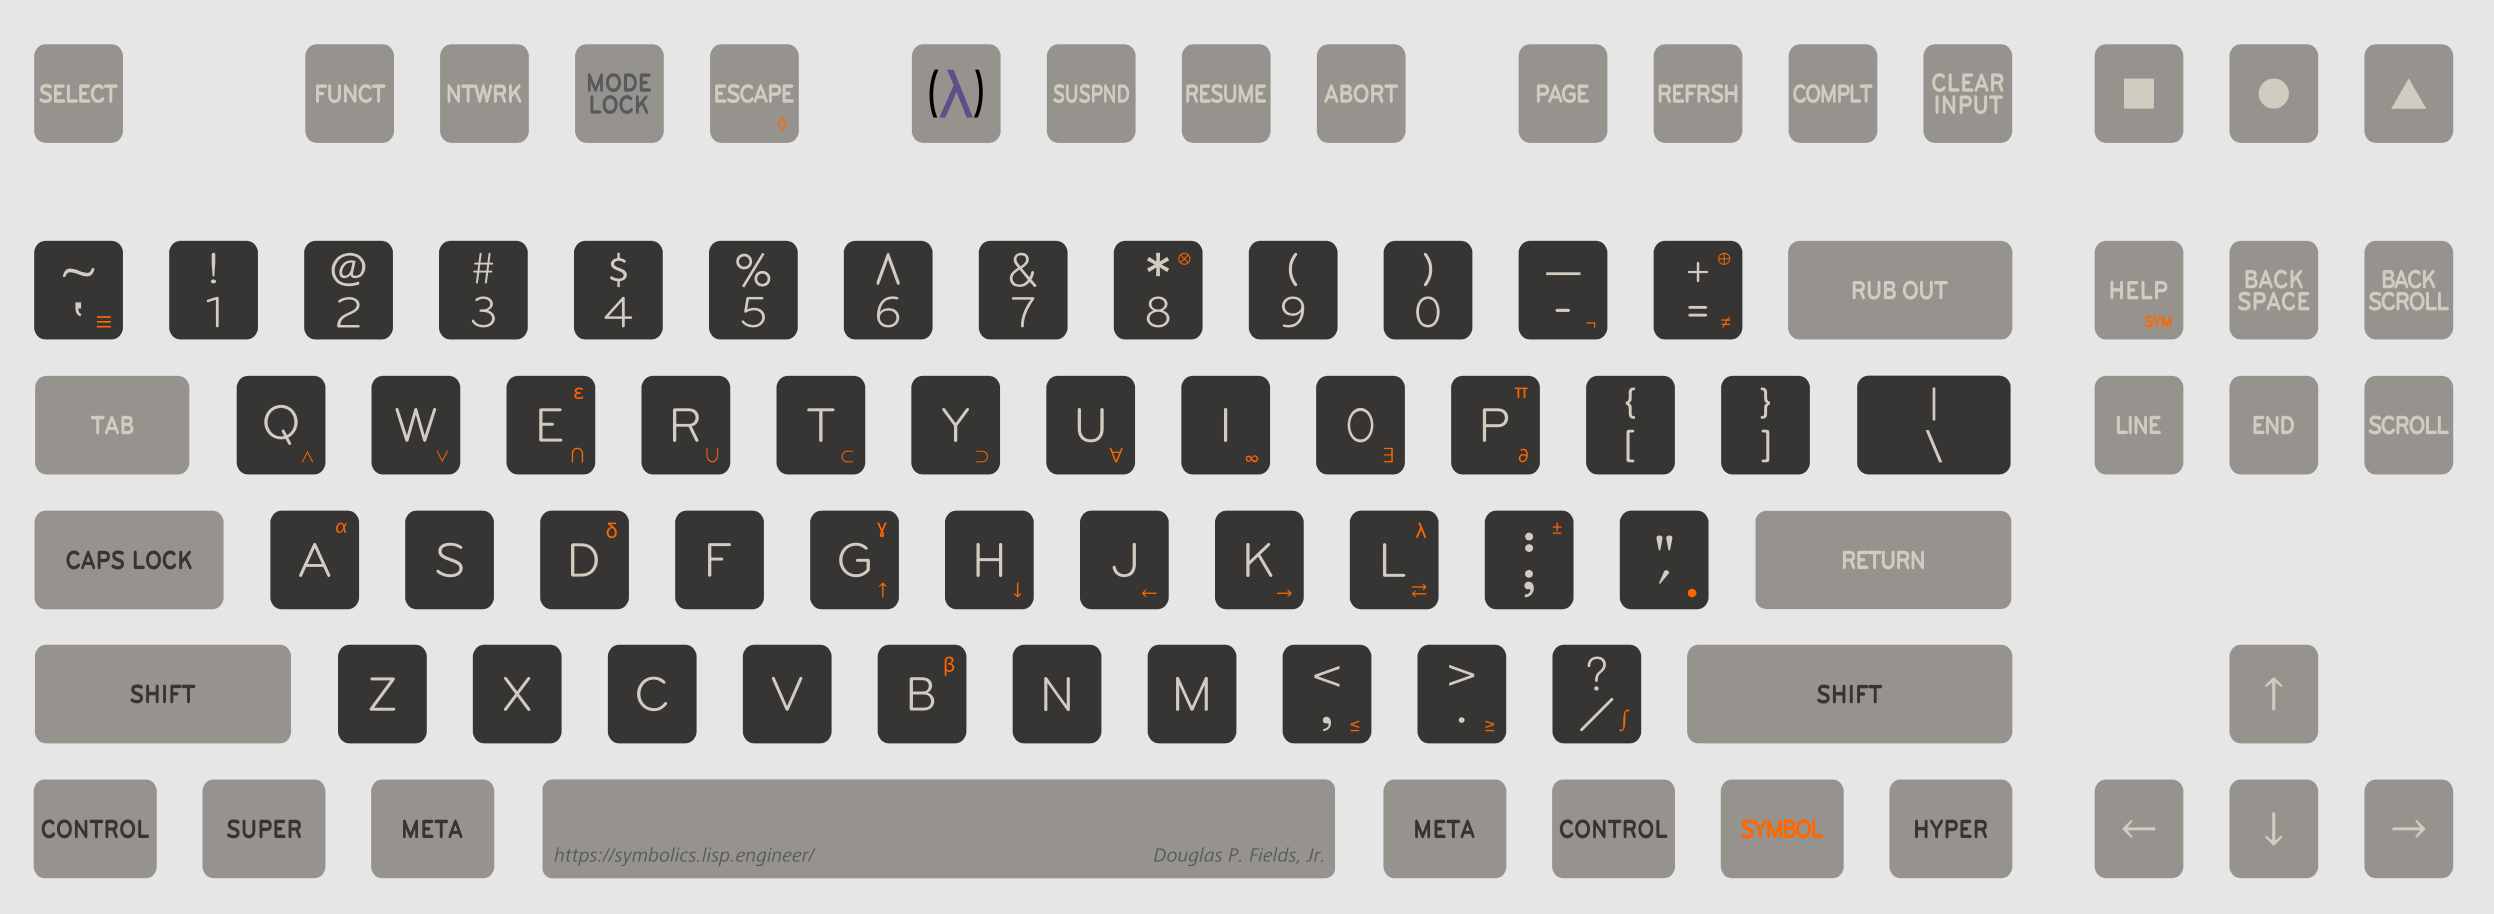 Enhanced X11 Keyboard